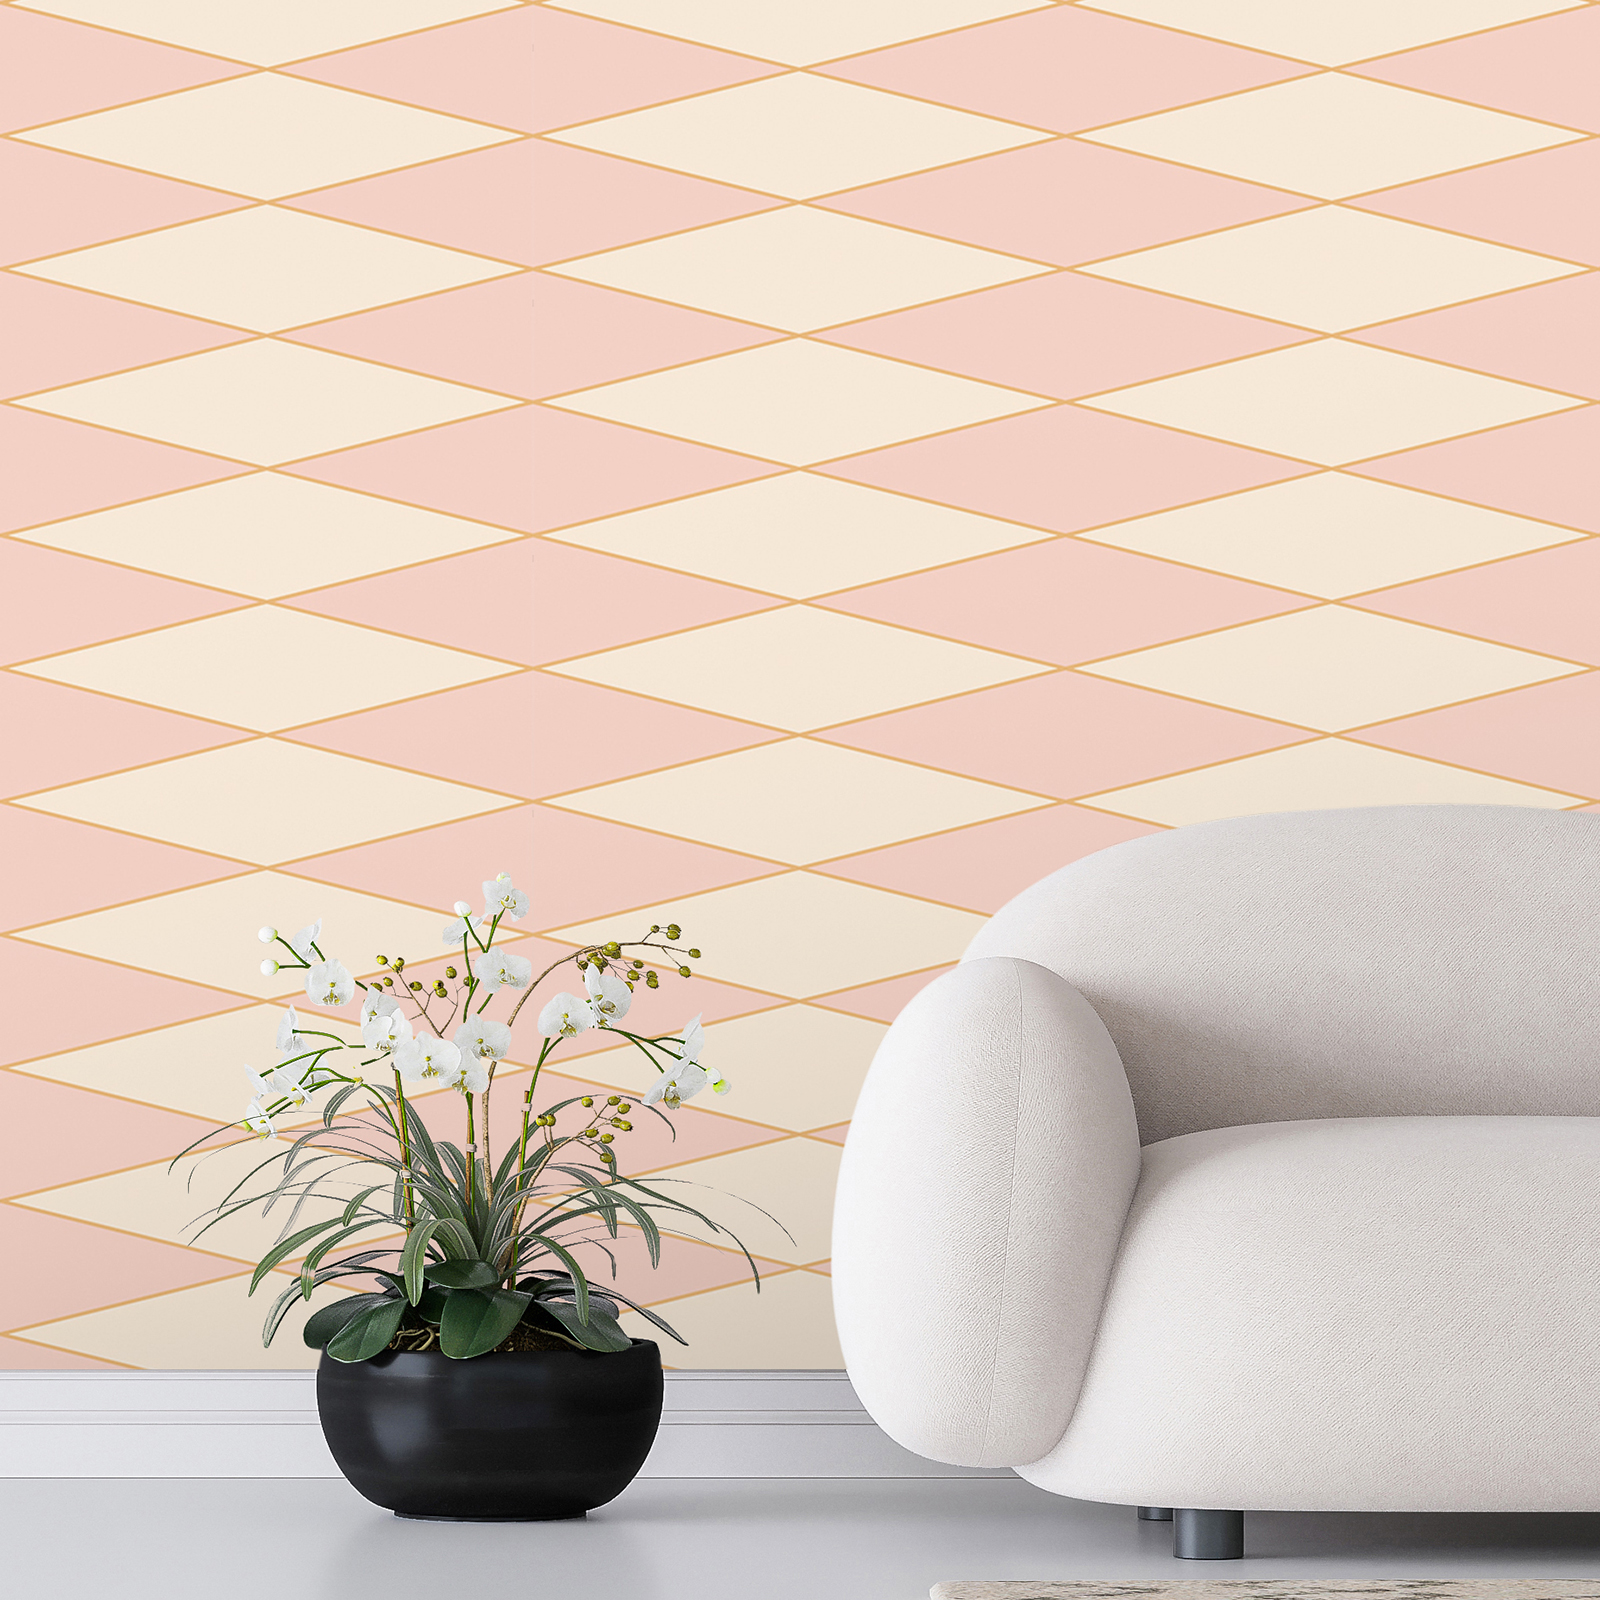         Retro 70s style diamond mural - pink, cream, orange | Premium smooth fleece
    